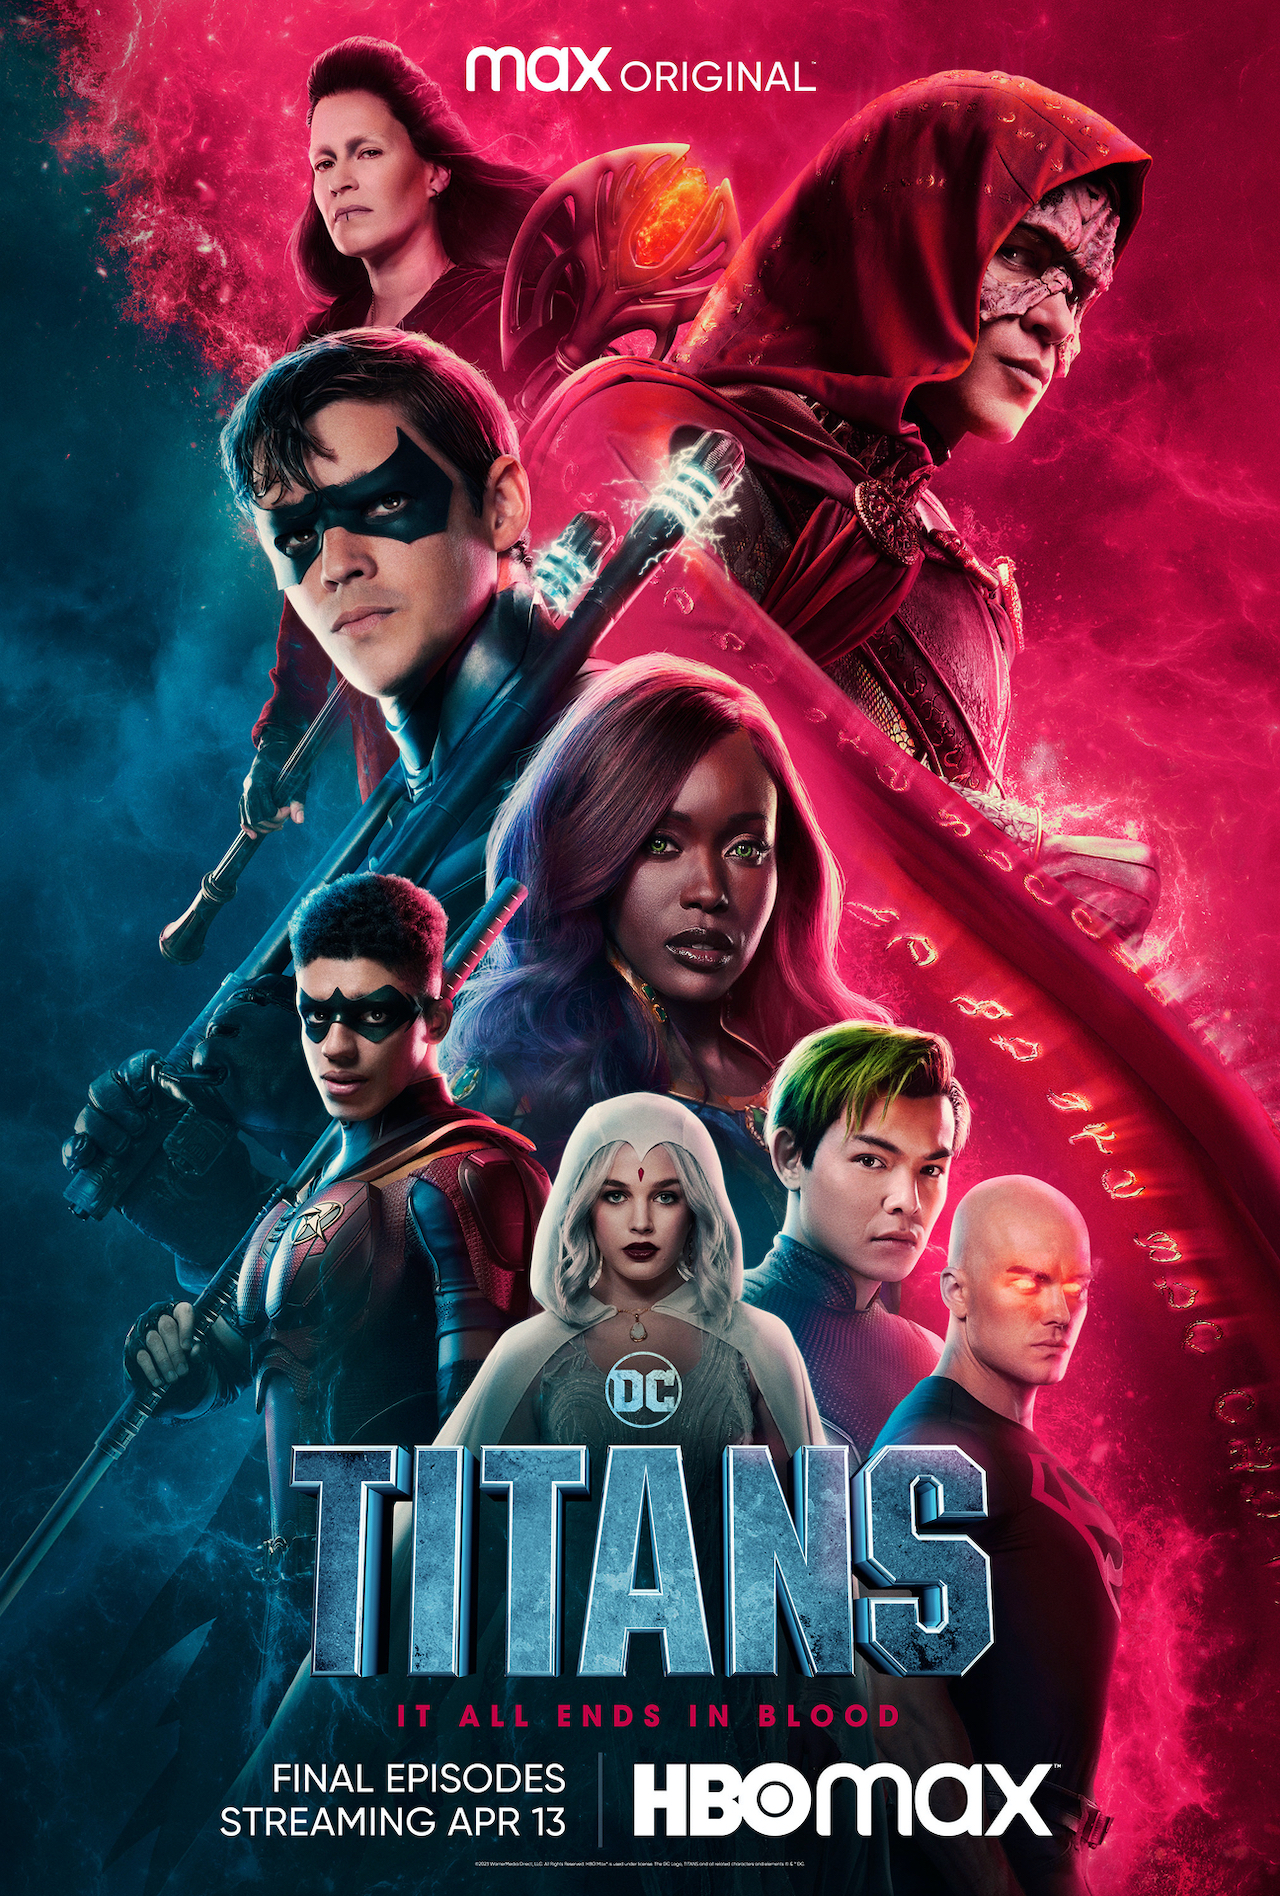 Titans Season 4, Part 2 poster of main characters